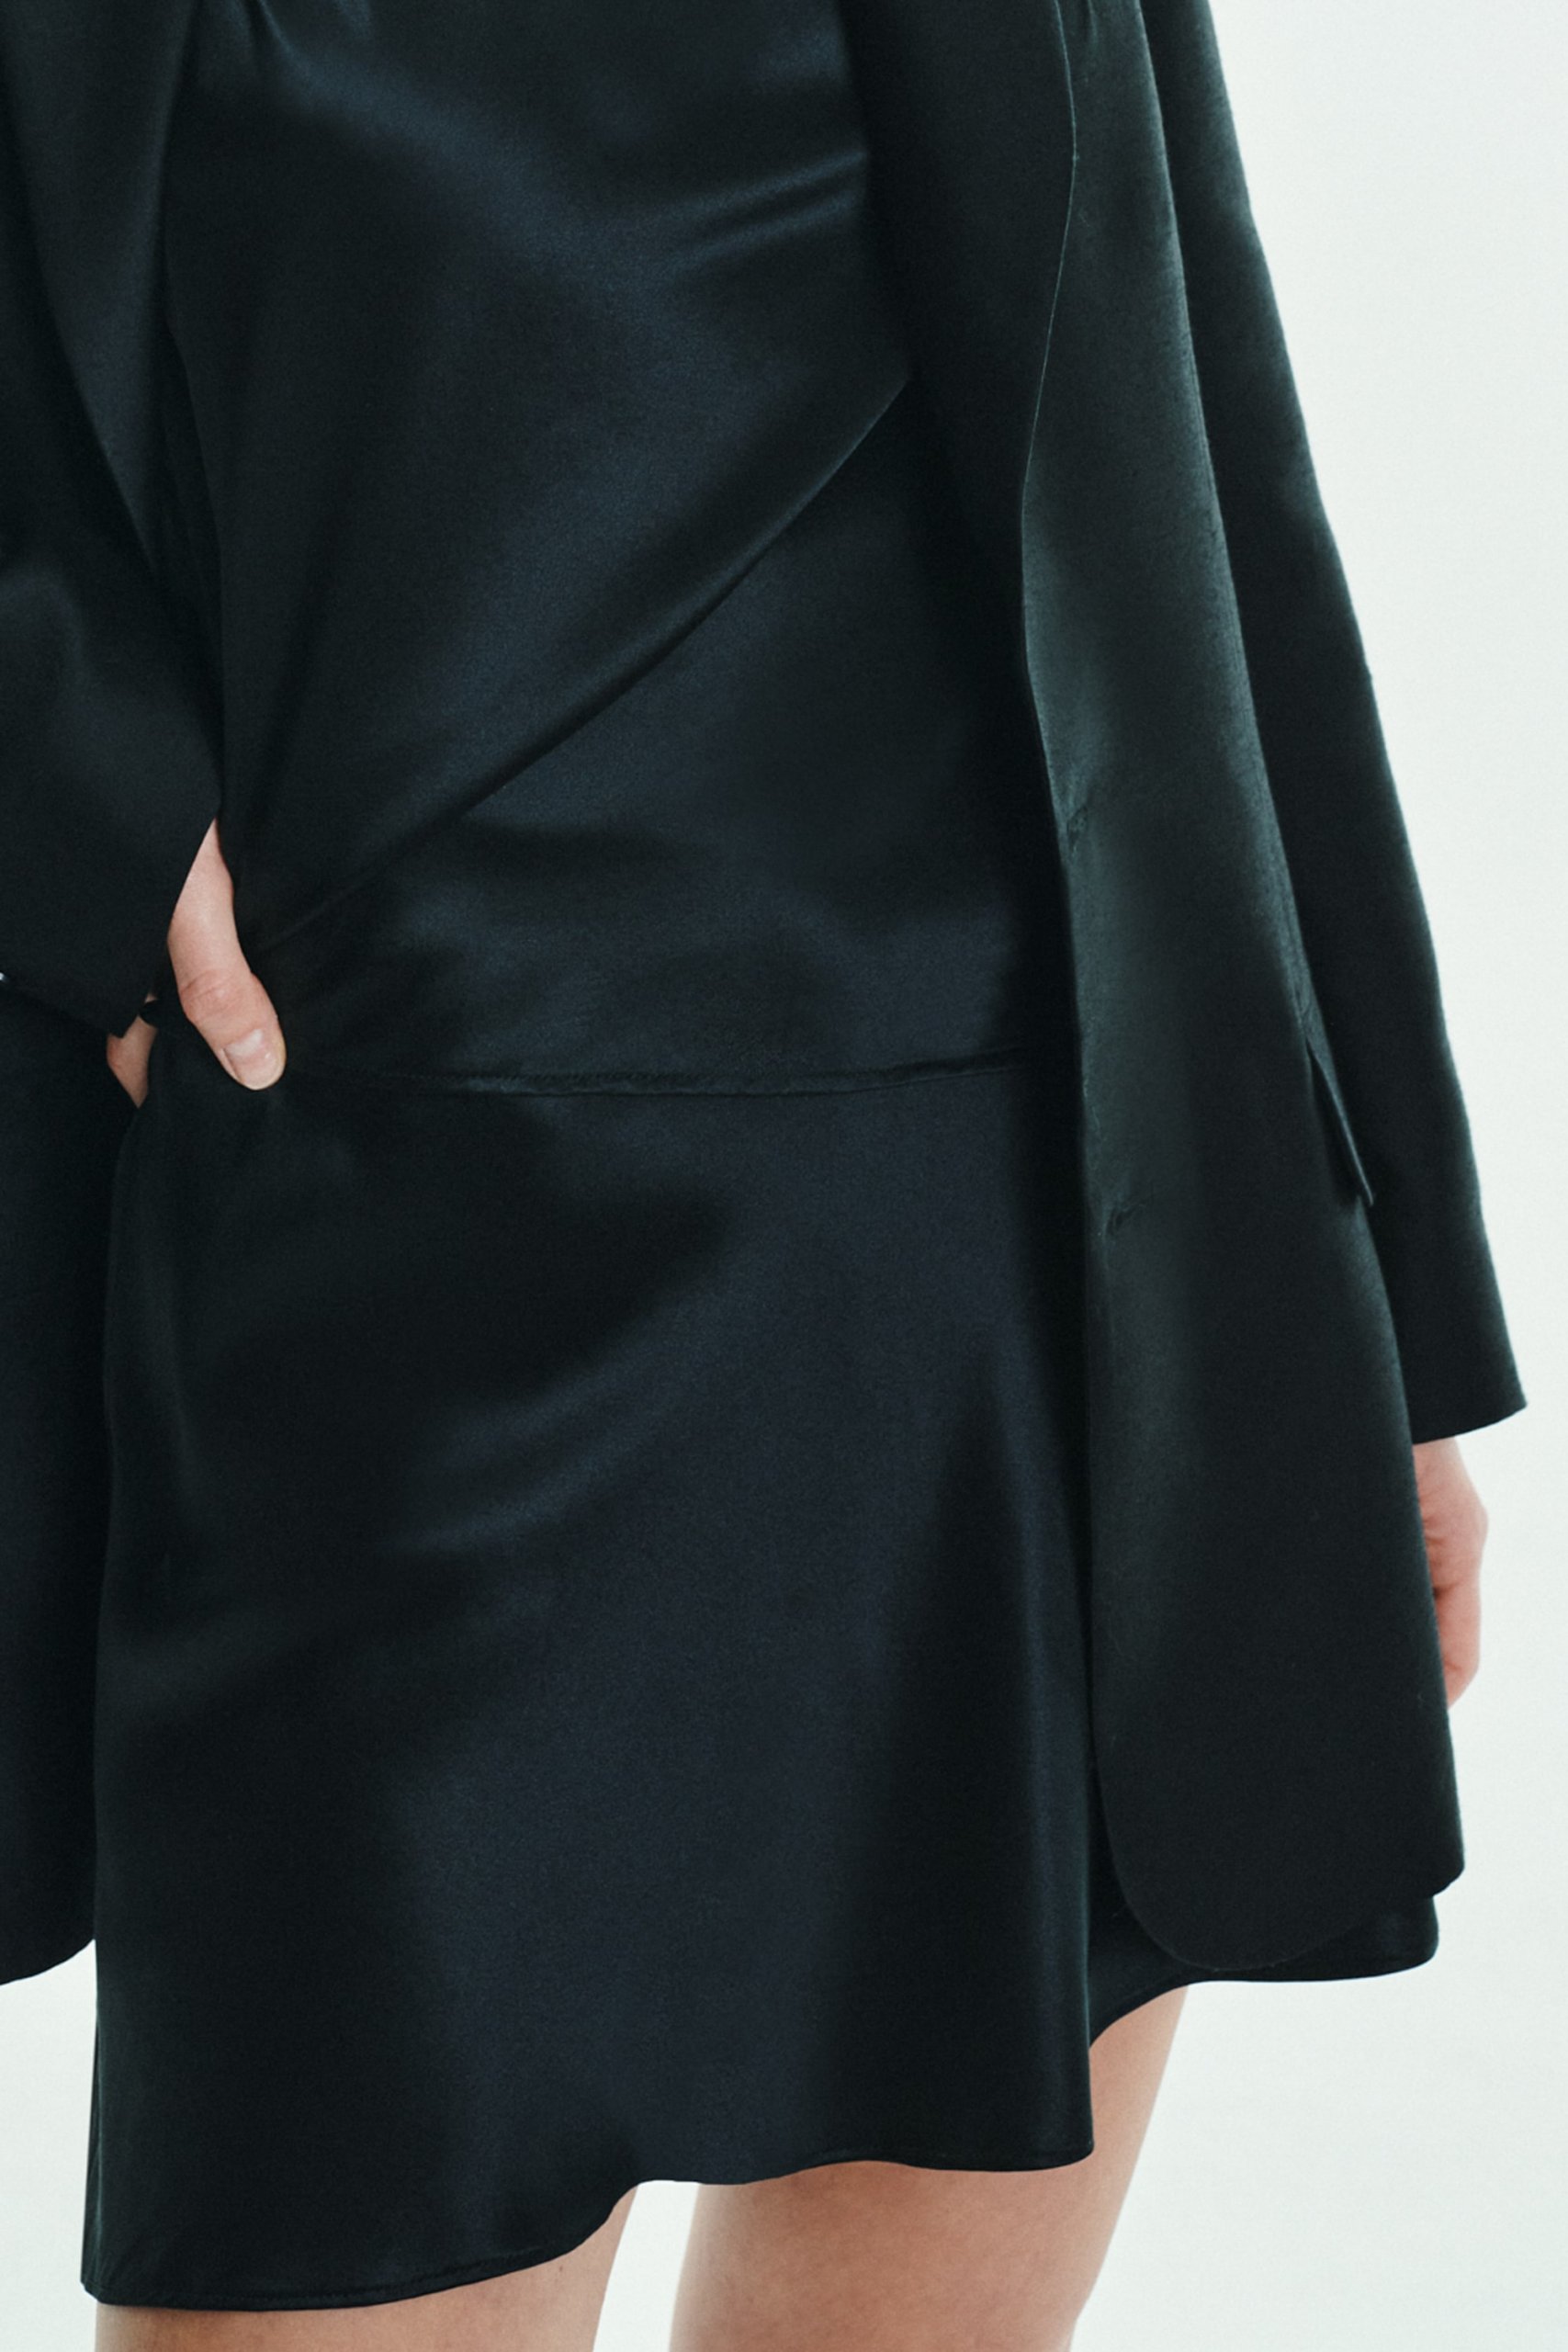 Silk Mini Skirt in black